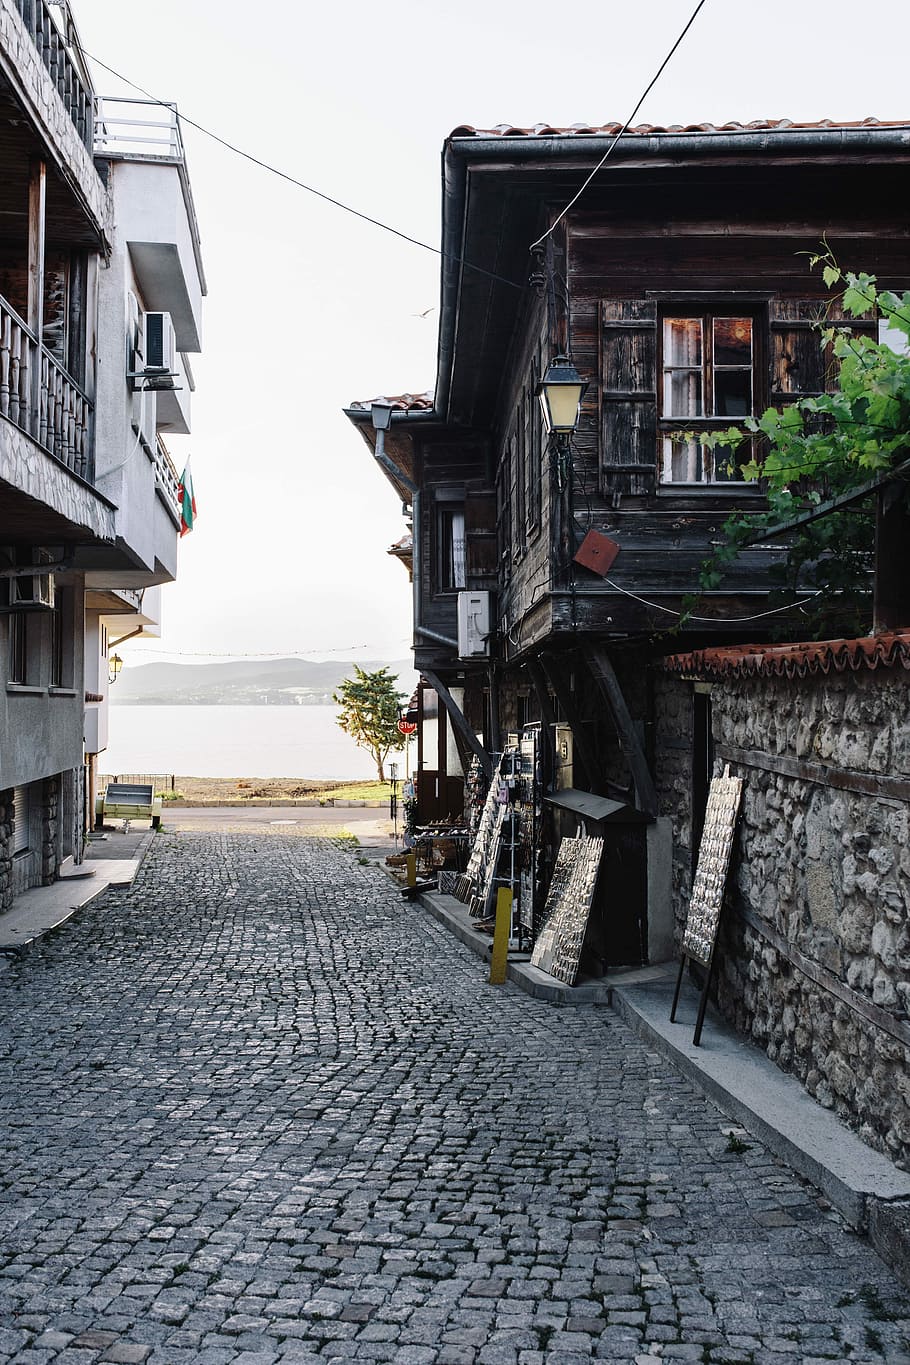 sempit, jalan-jalan, tua, rumah, nessebar kota, kota tua, Nessebar, Bulgaria, musim panas, arsitektur